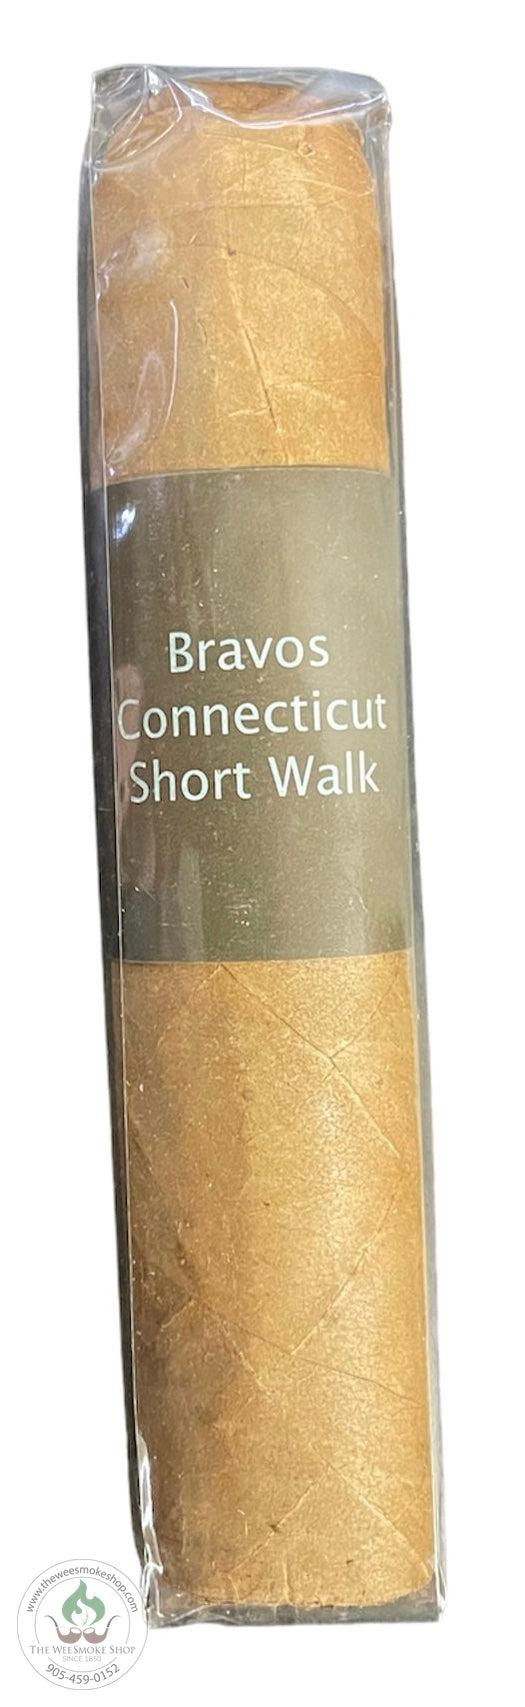 Bravos - Connecticut Short Walk - The Wee Smoke Shop